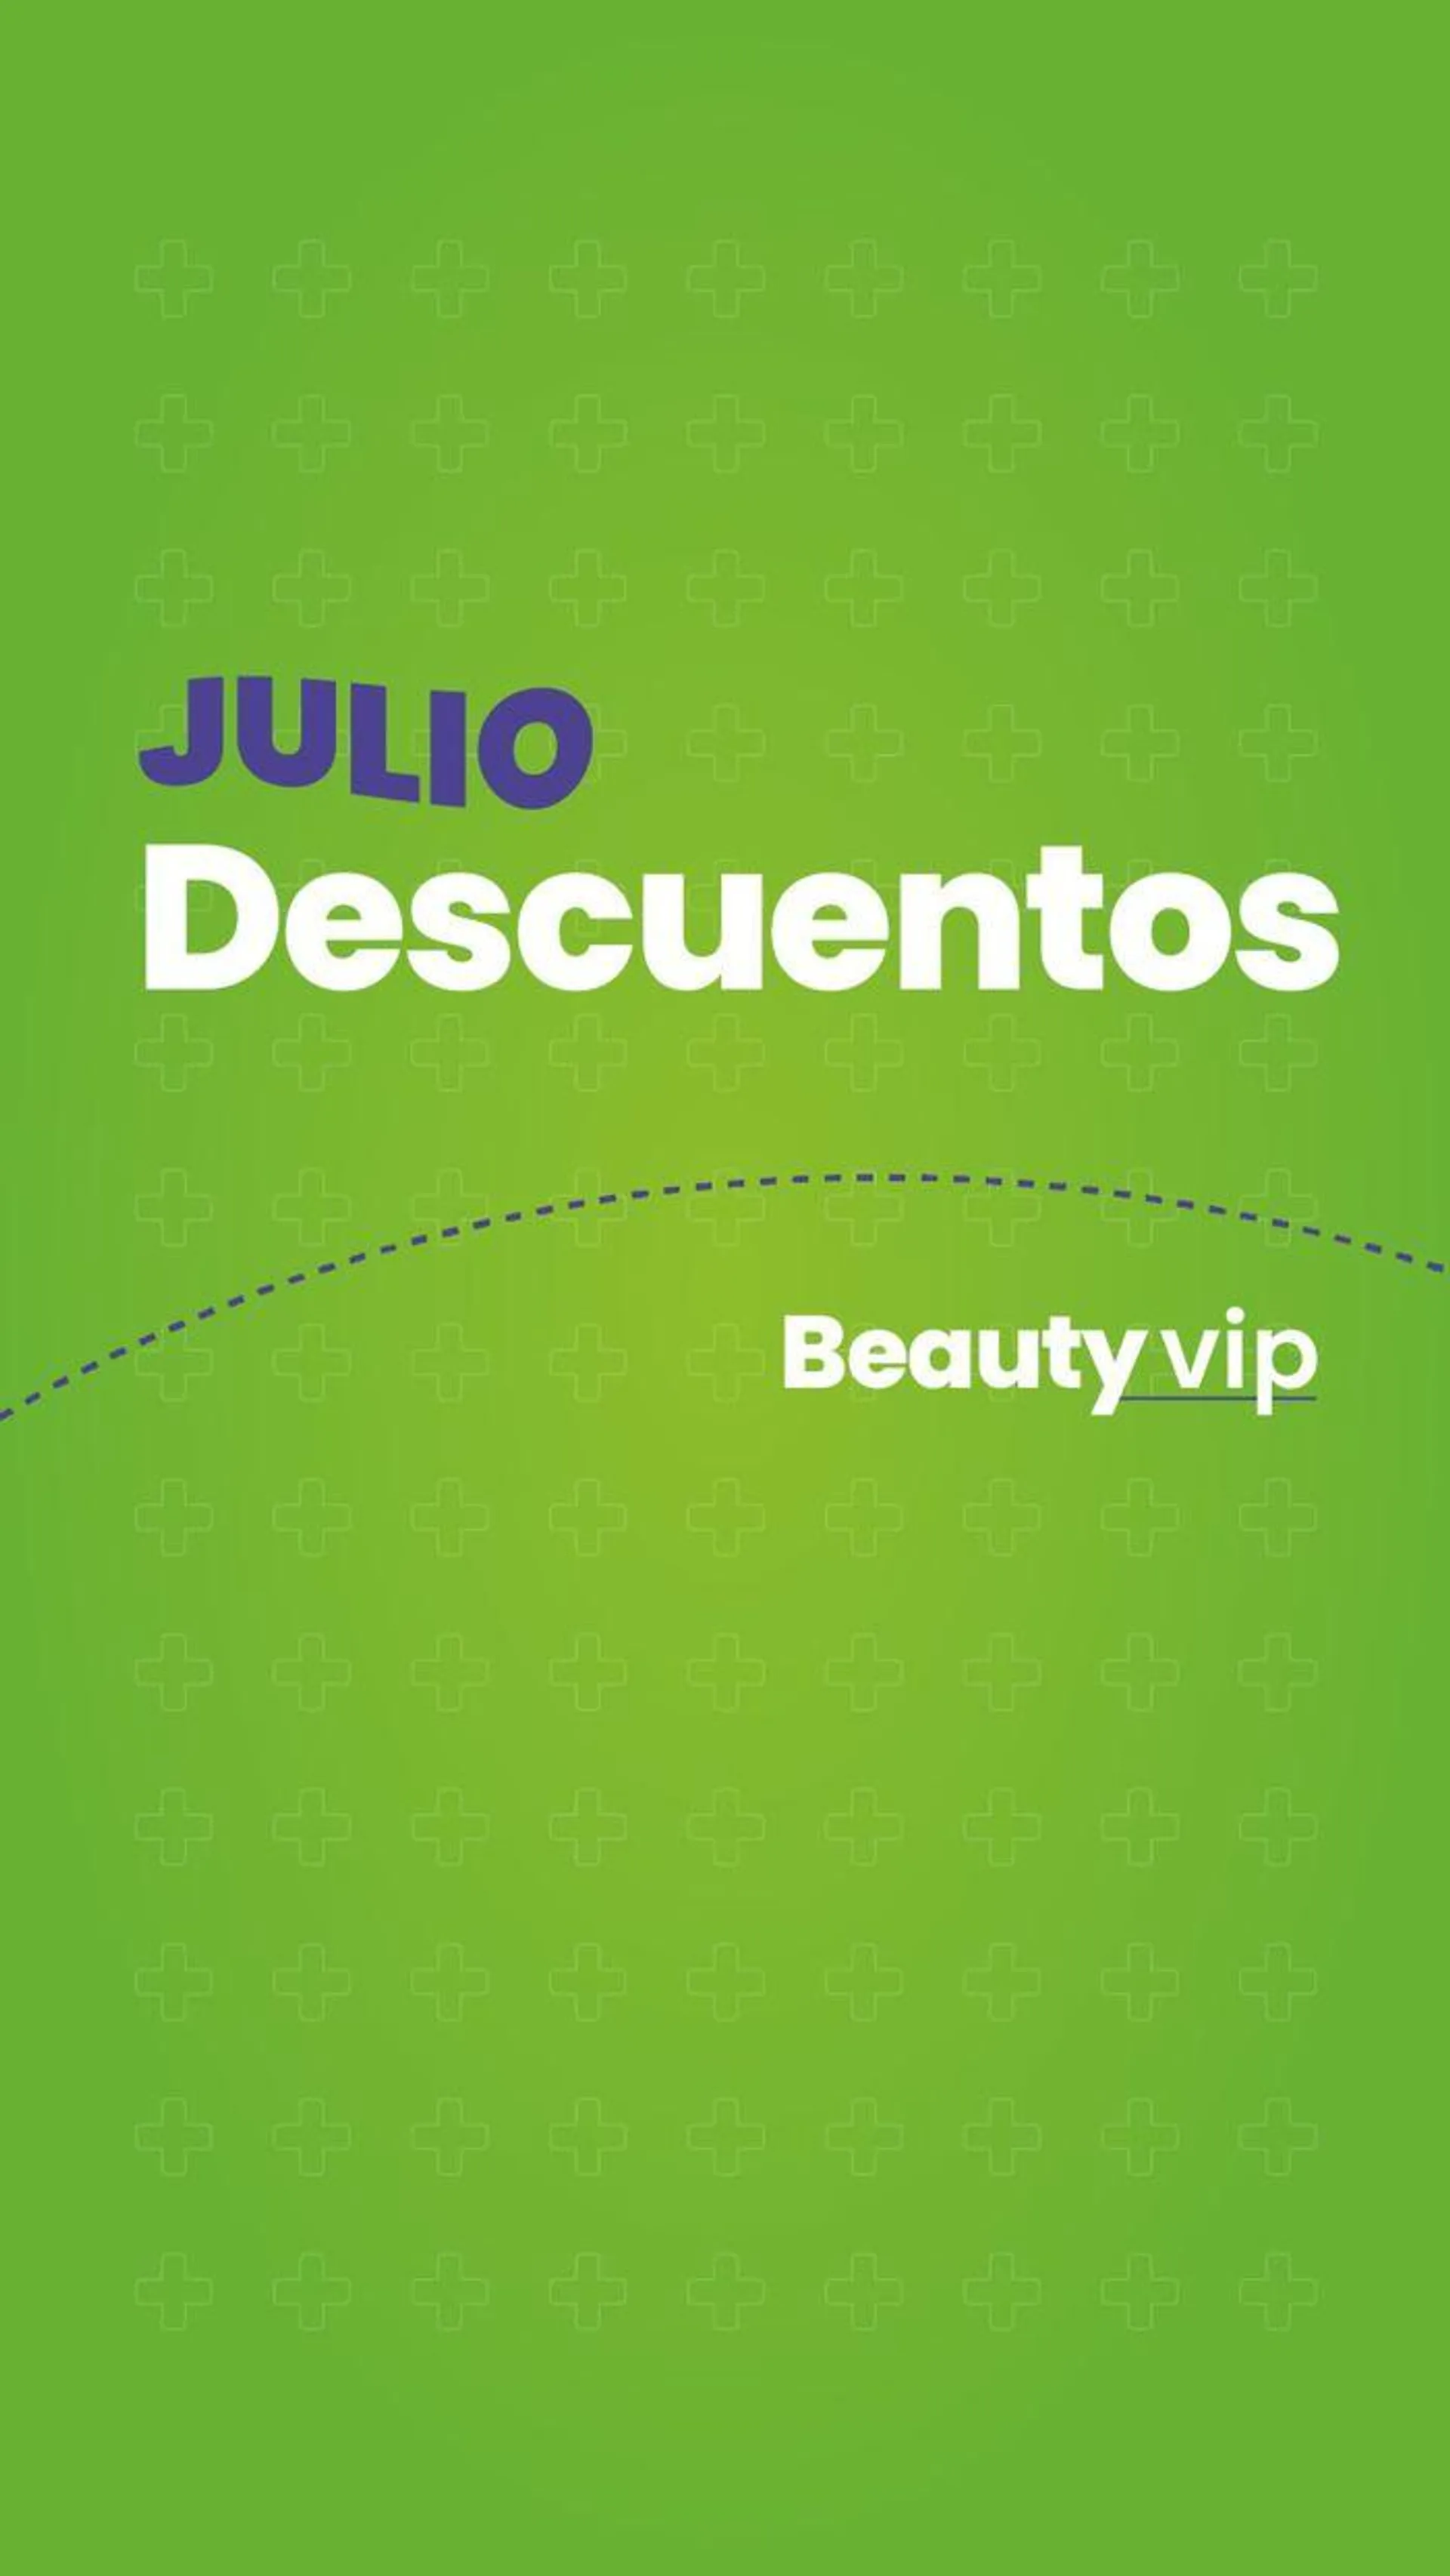 Descuentos de Julio BeautyVip - 1